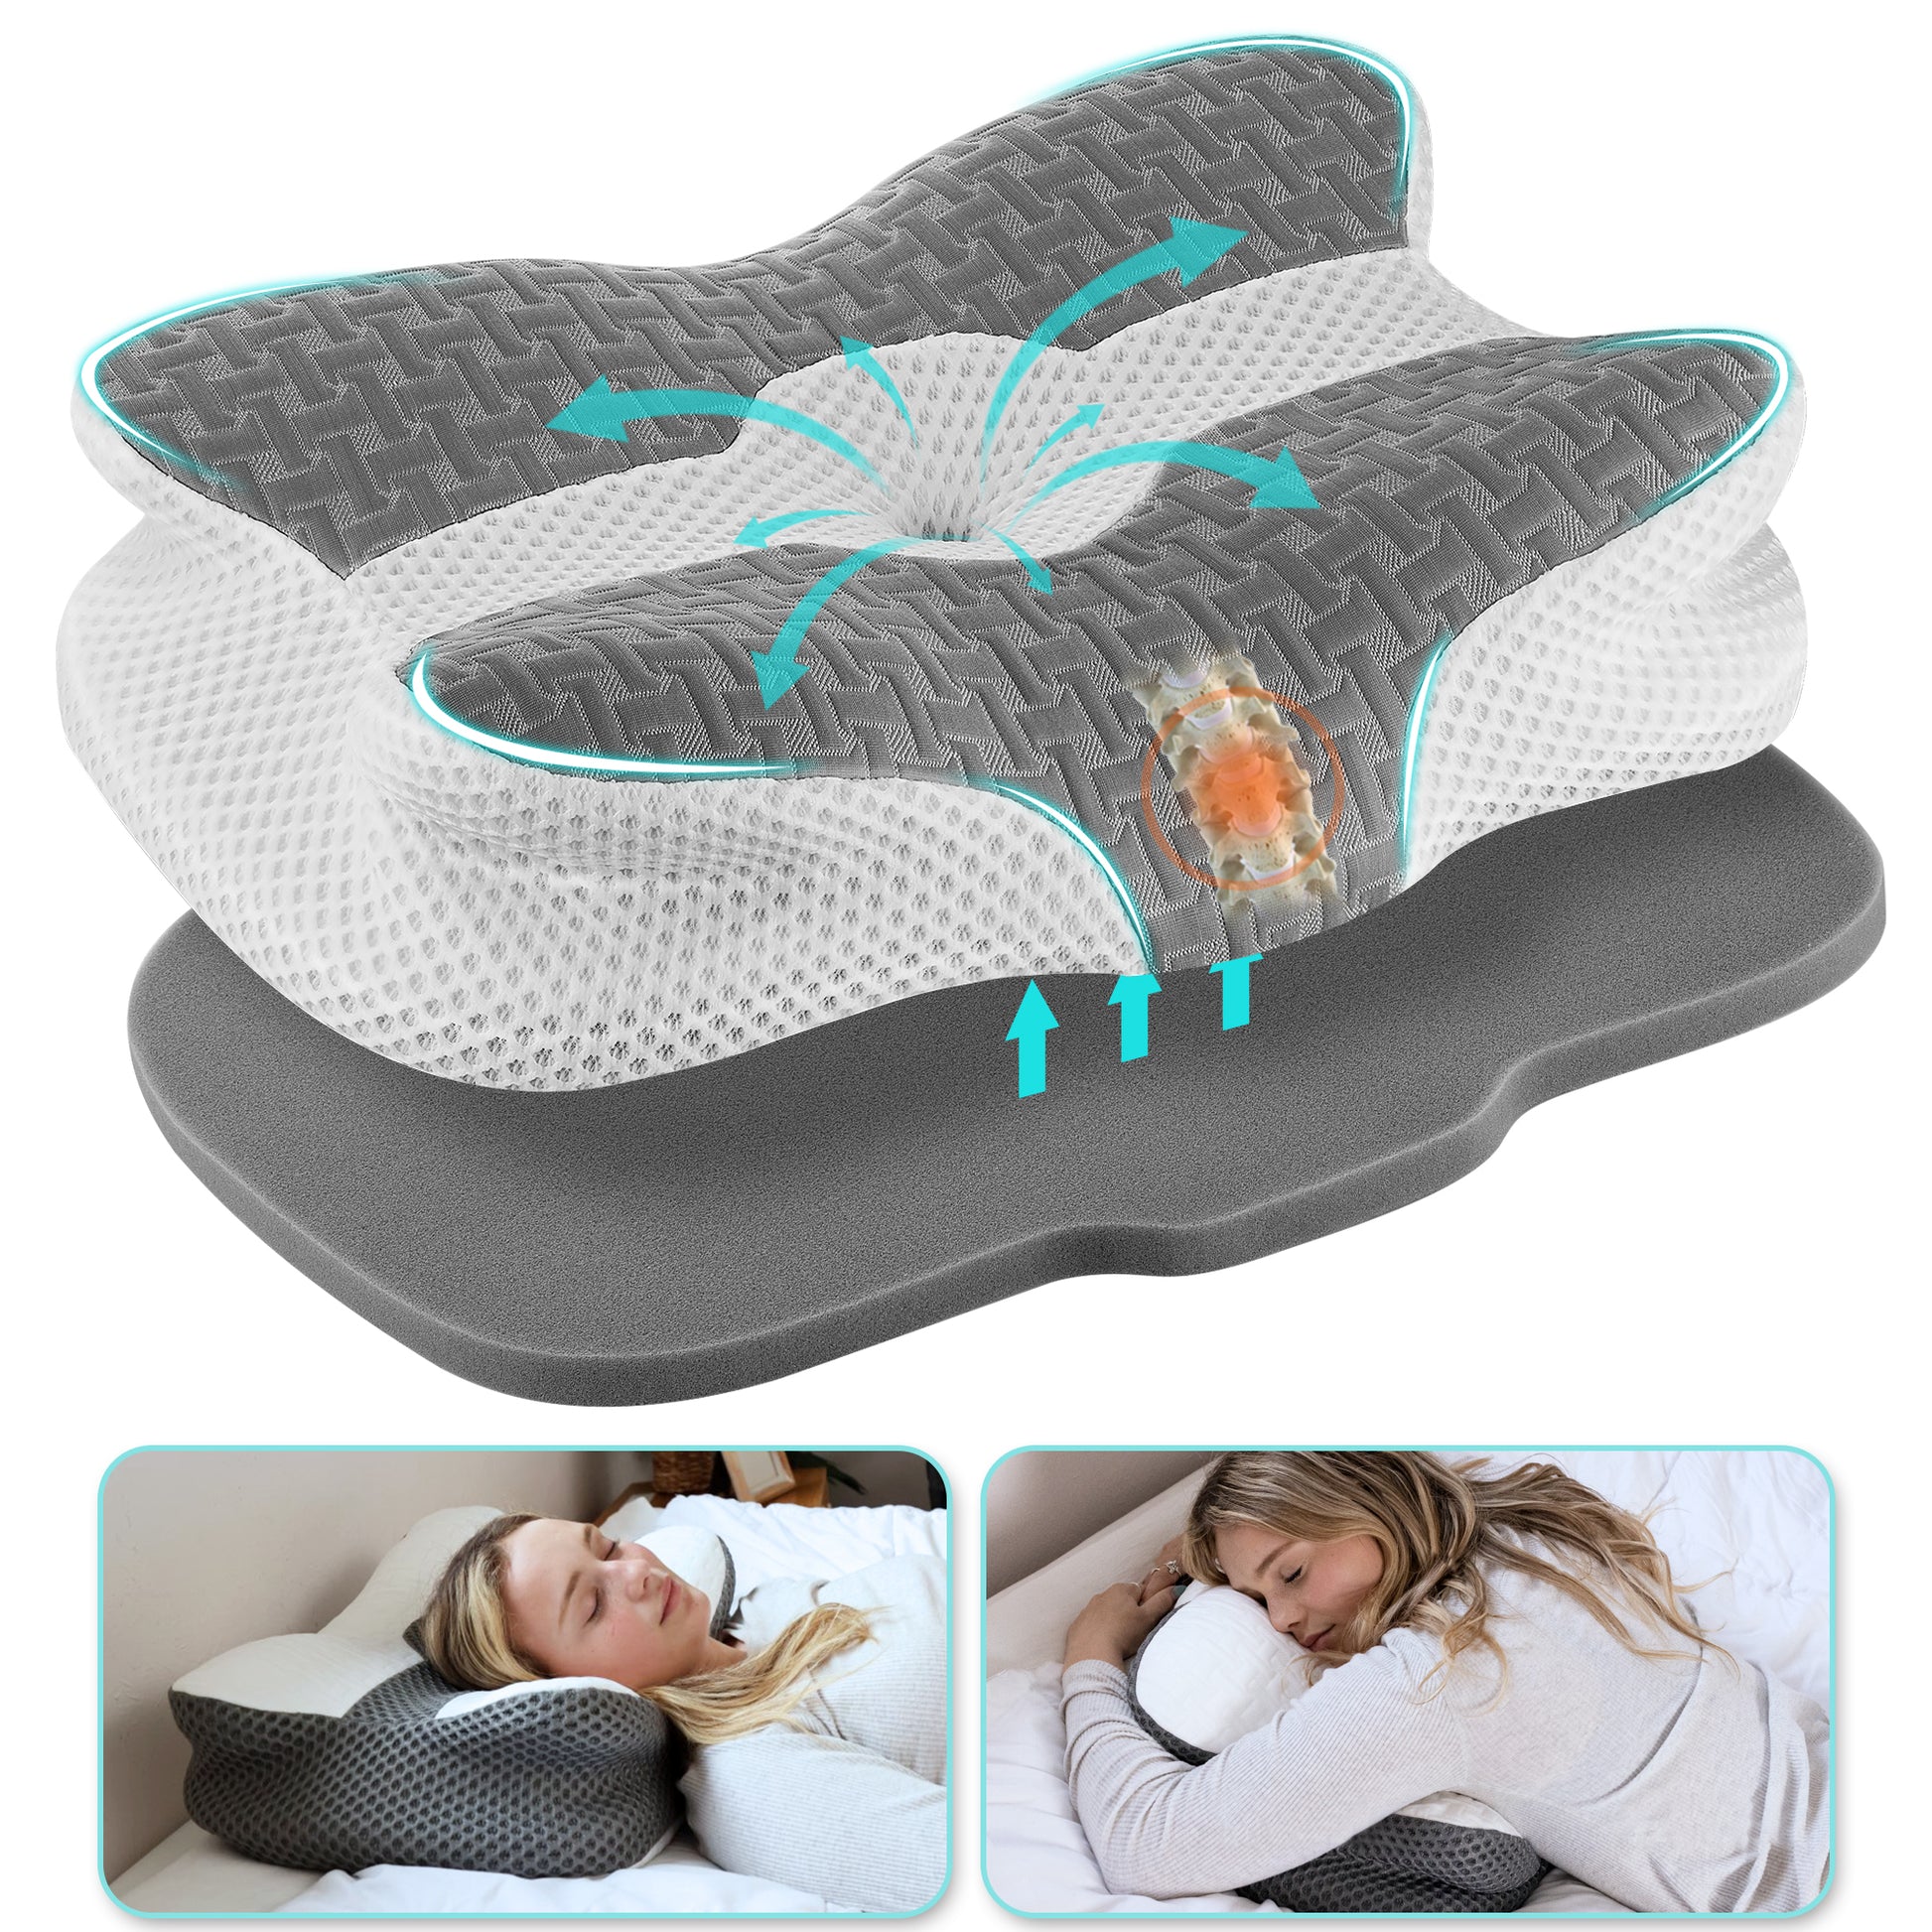 Elviros Adjustable Orthopedic Contour Memory Foam Pillow-2